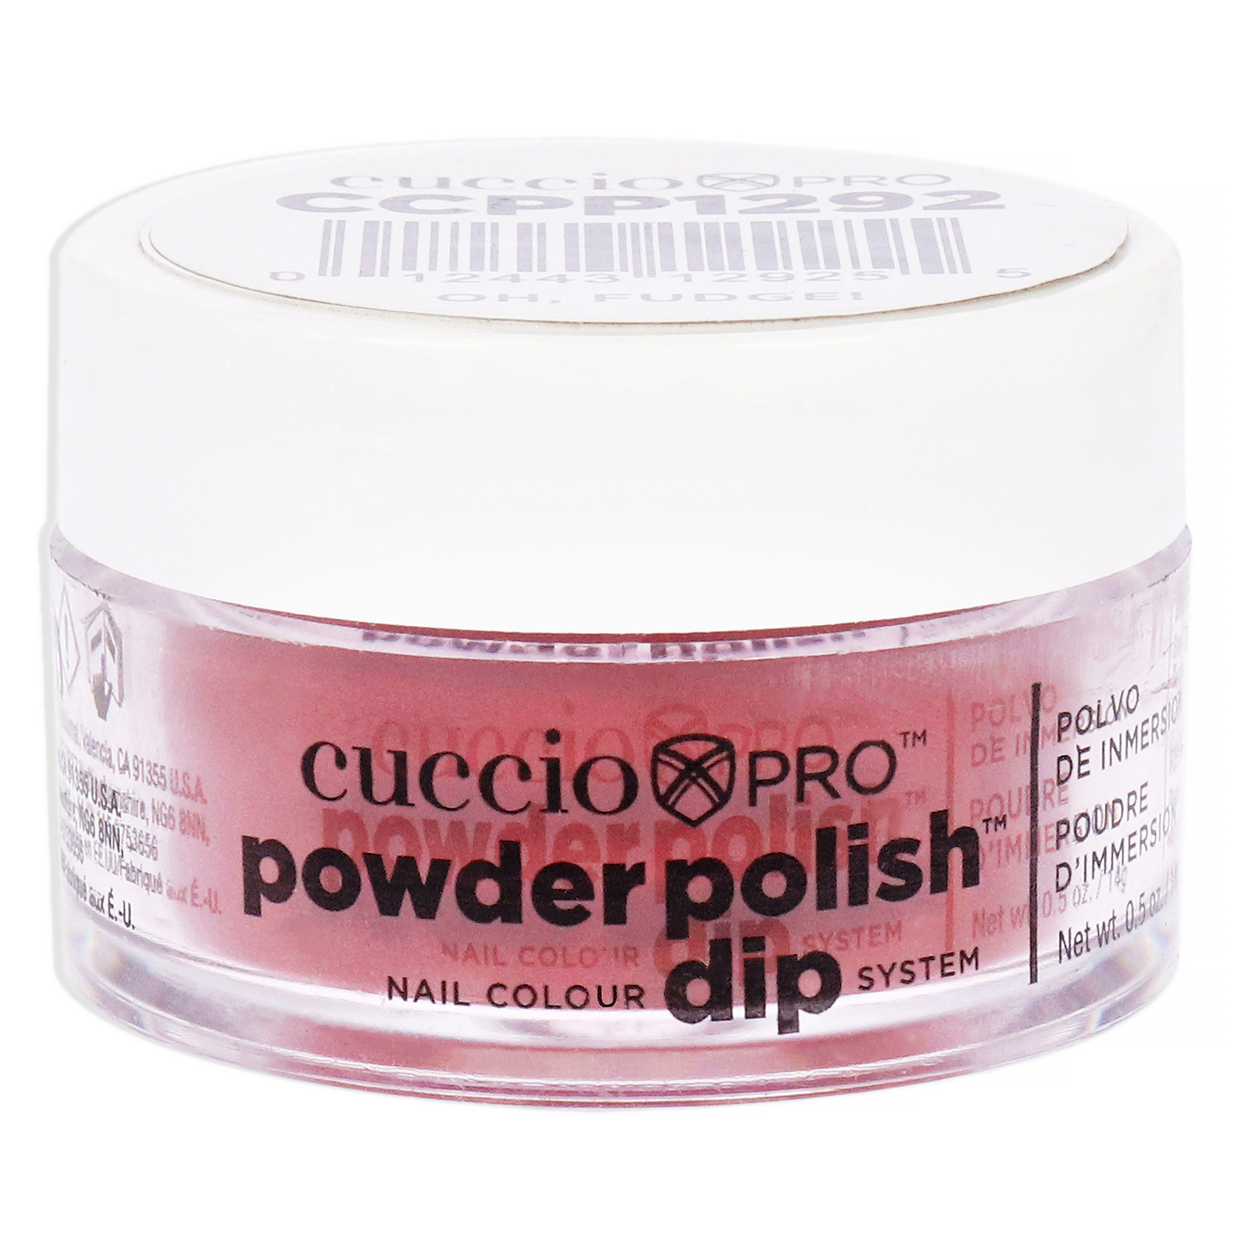 Cuccio Colour Pro Powder Polish Nail Colour Dip System - Oh Fudge Nail Powder 0.5 Oz